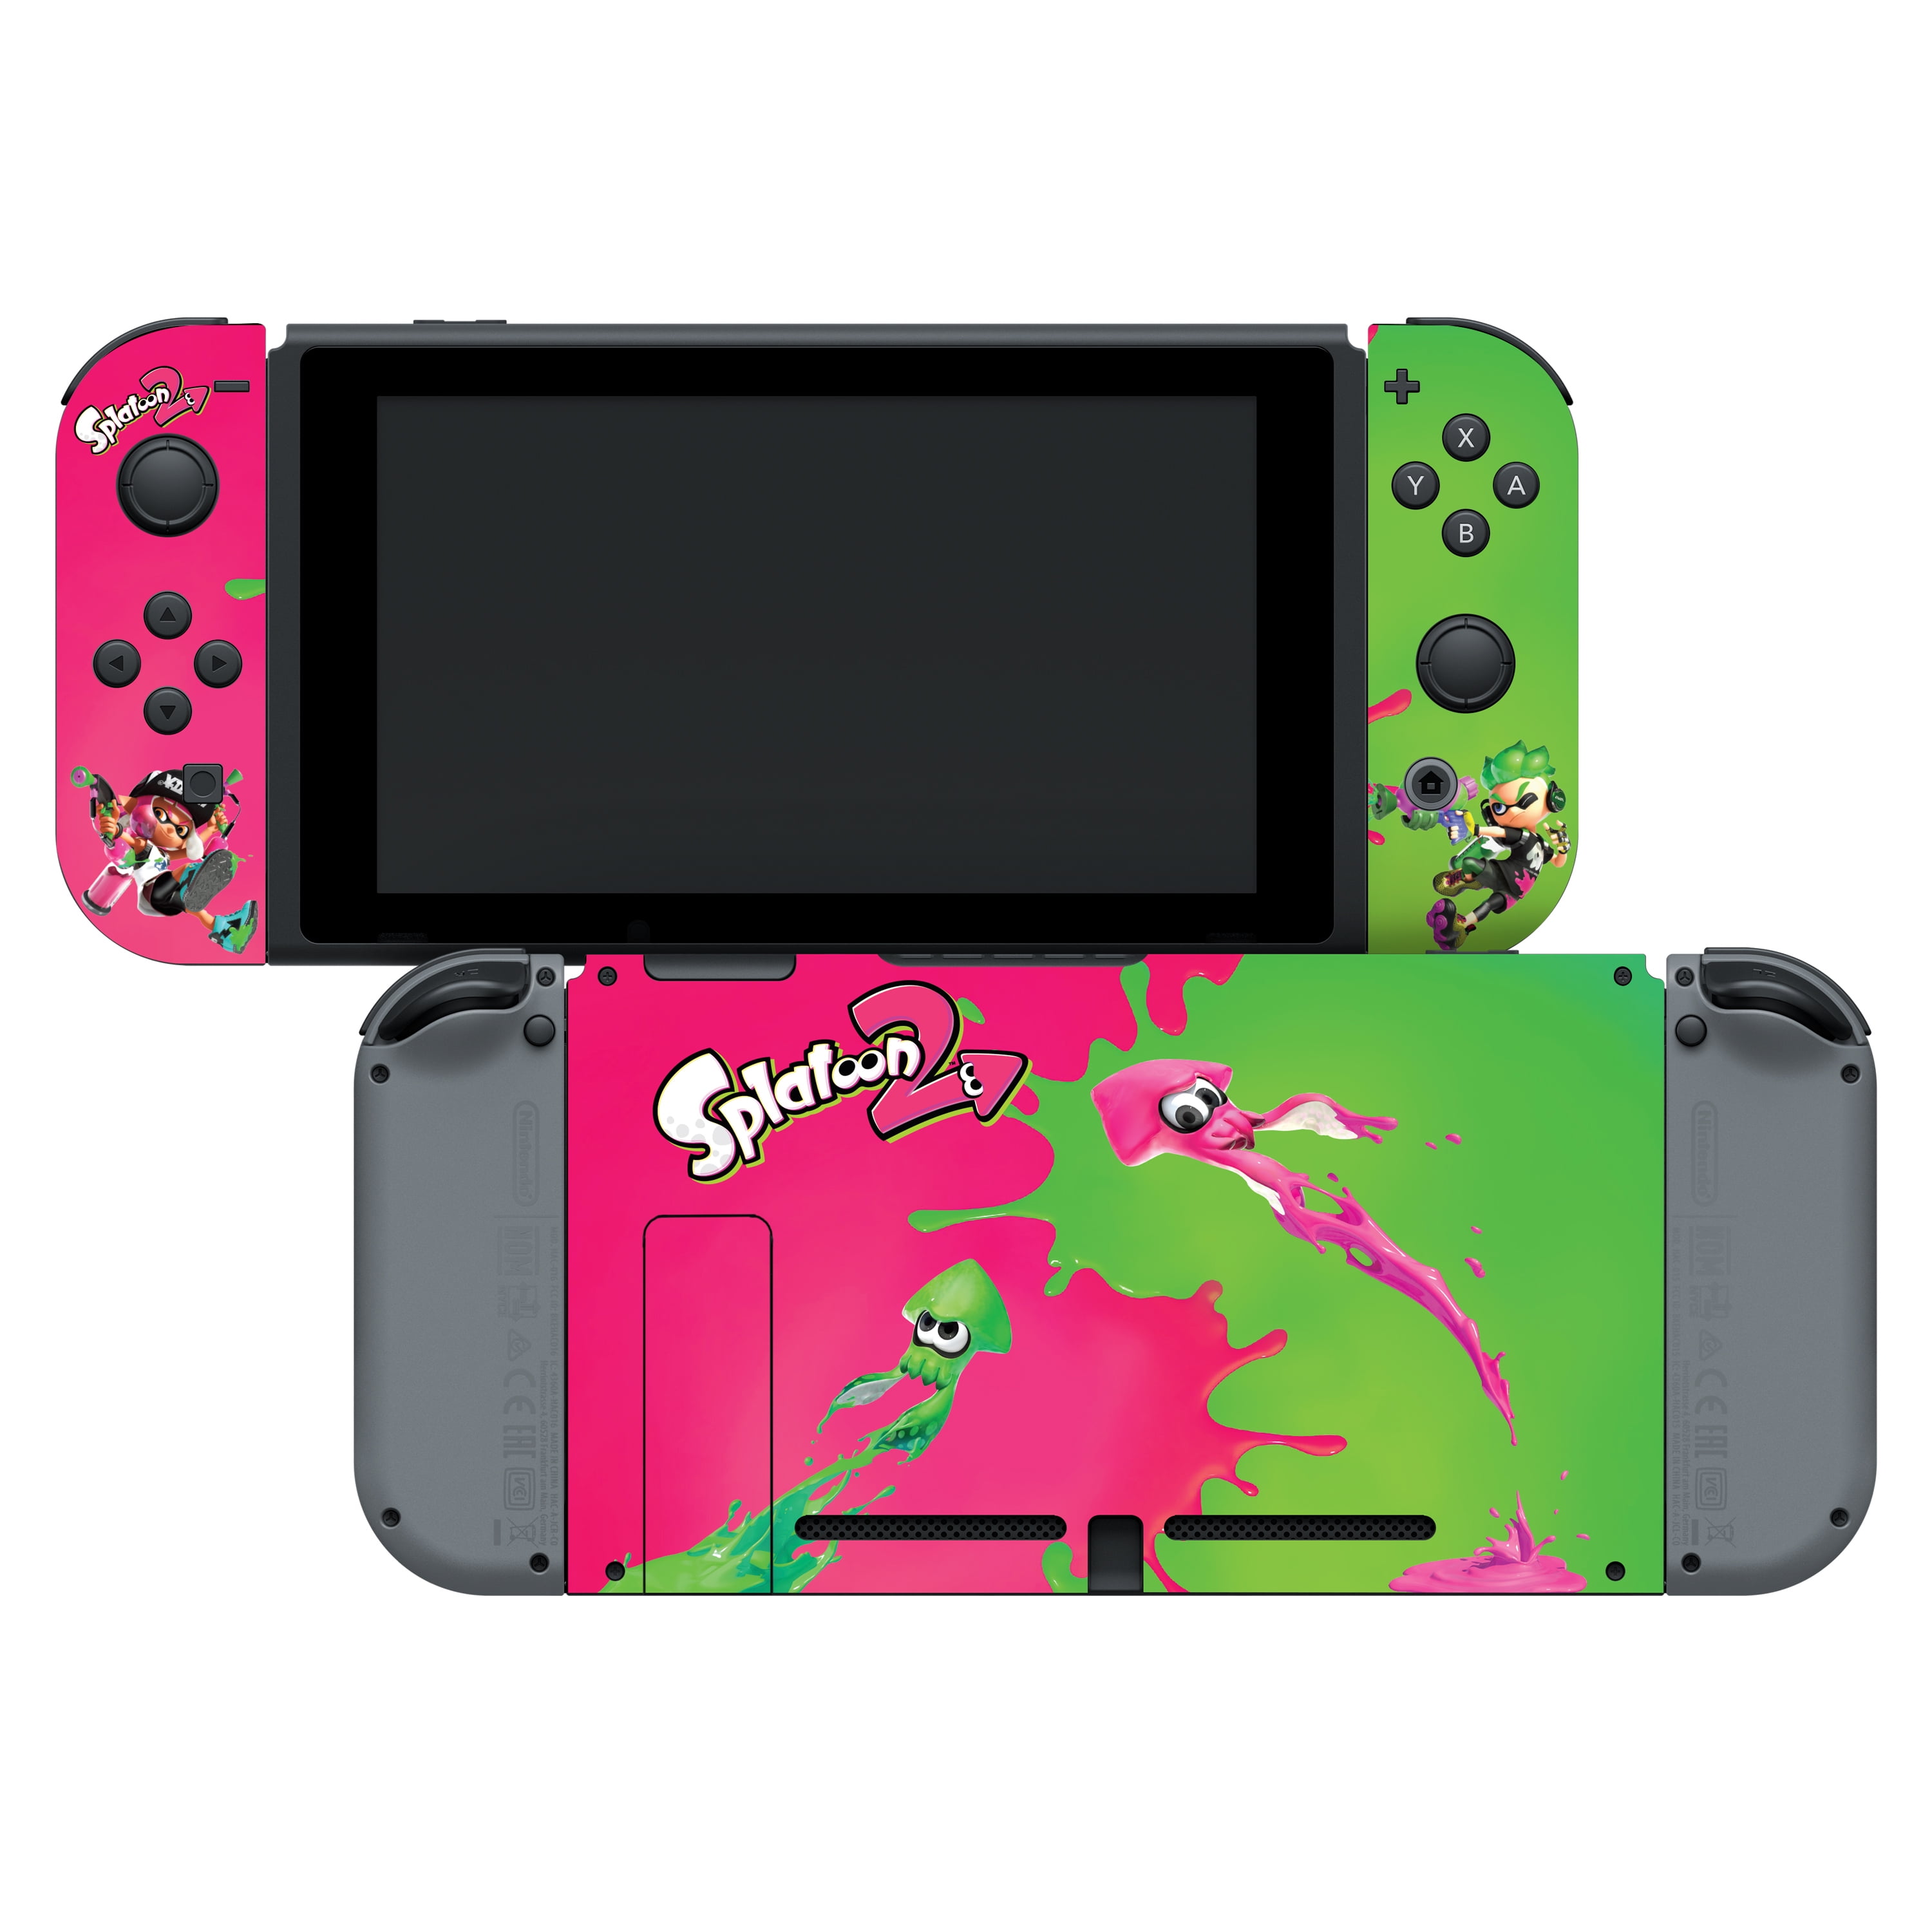 Splatoon 3 nintendo switch. Nintendo Switch Nintendo Splatoon 2. Nintendo Switch зеленый. Игровая приставка Nintendo Switch OLED 64 ГБ, Splatoon 3 Edition. Контроллер Nintendo Switch Pro (Splatoon 3).